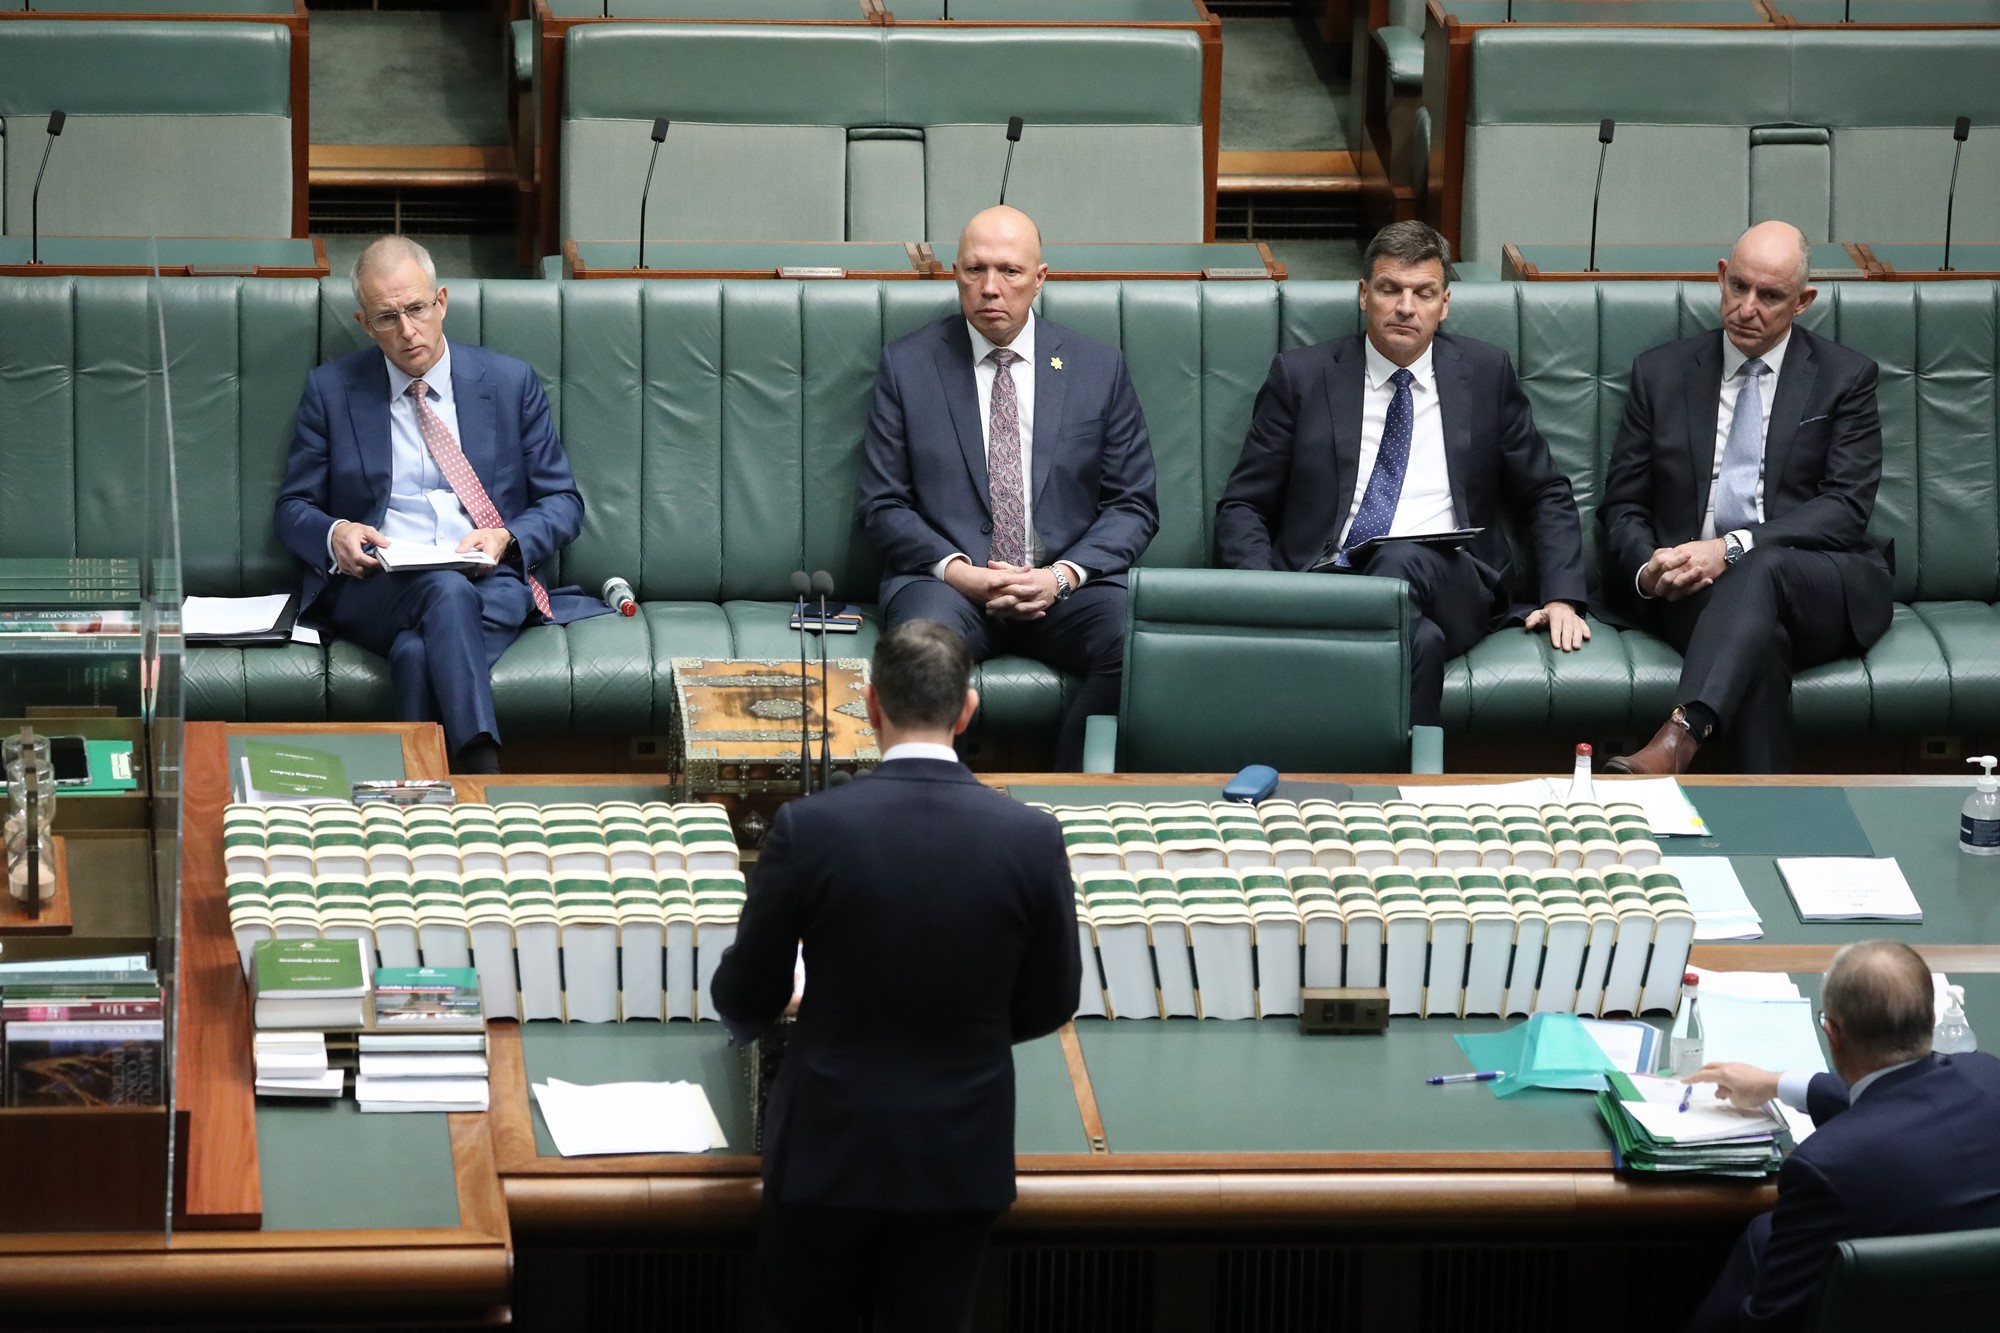 Opposition leader Peter Dutton listens.